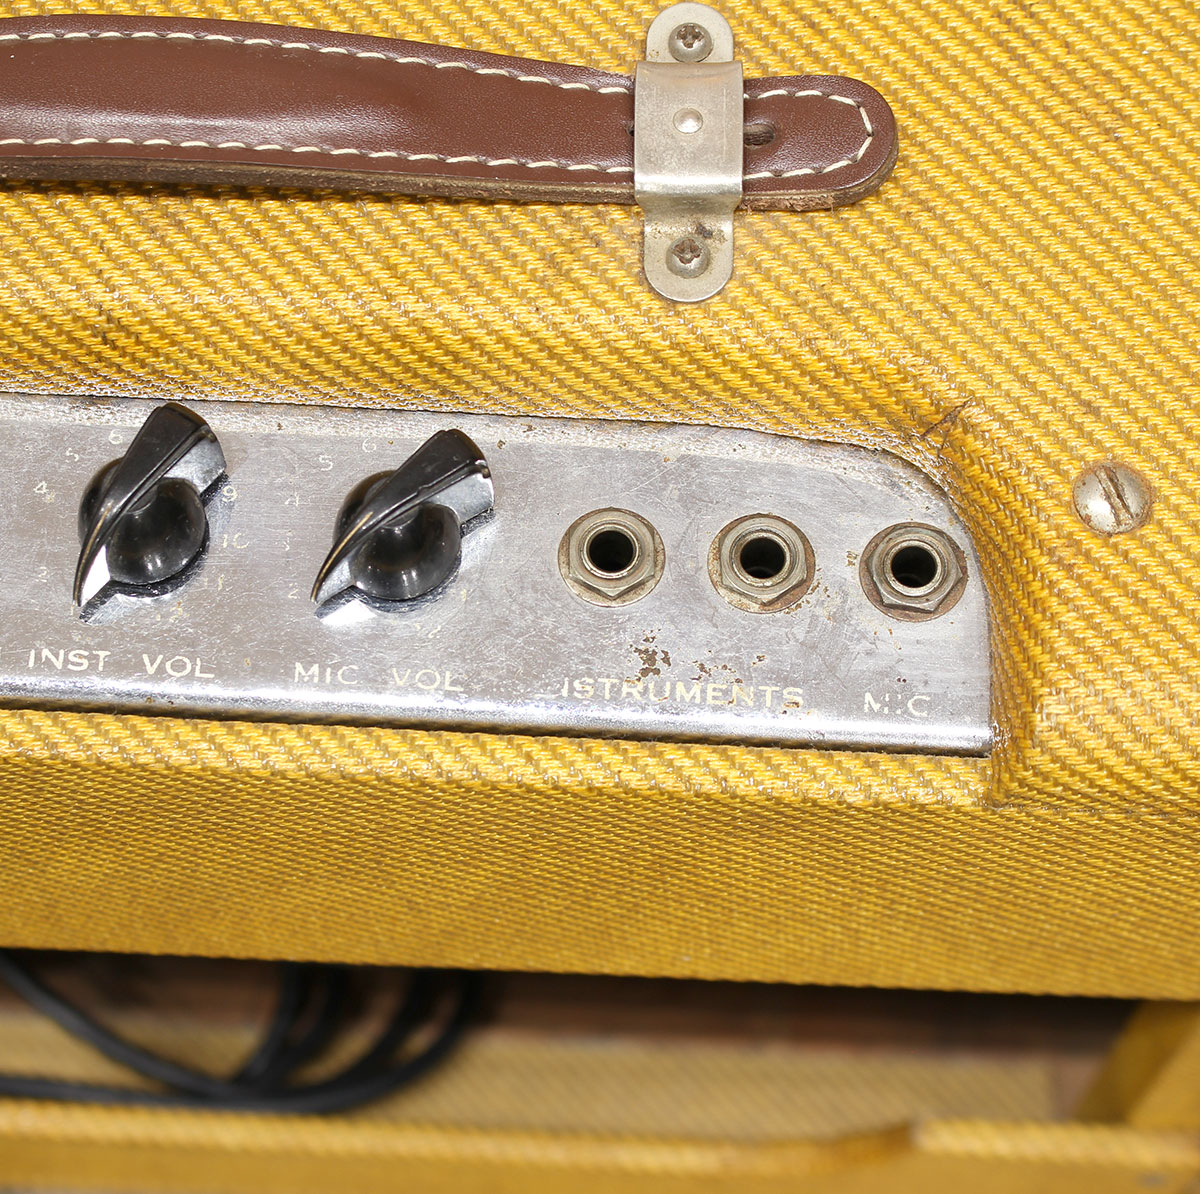 1950 Fender Deluxe Amp ”TV Front” - 7.jpg